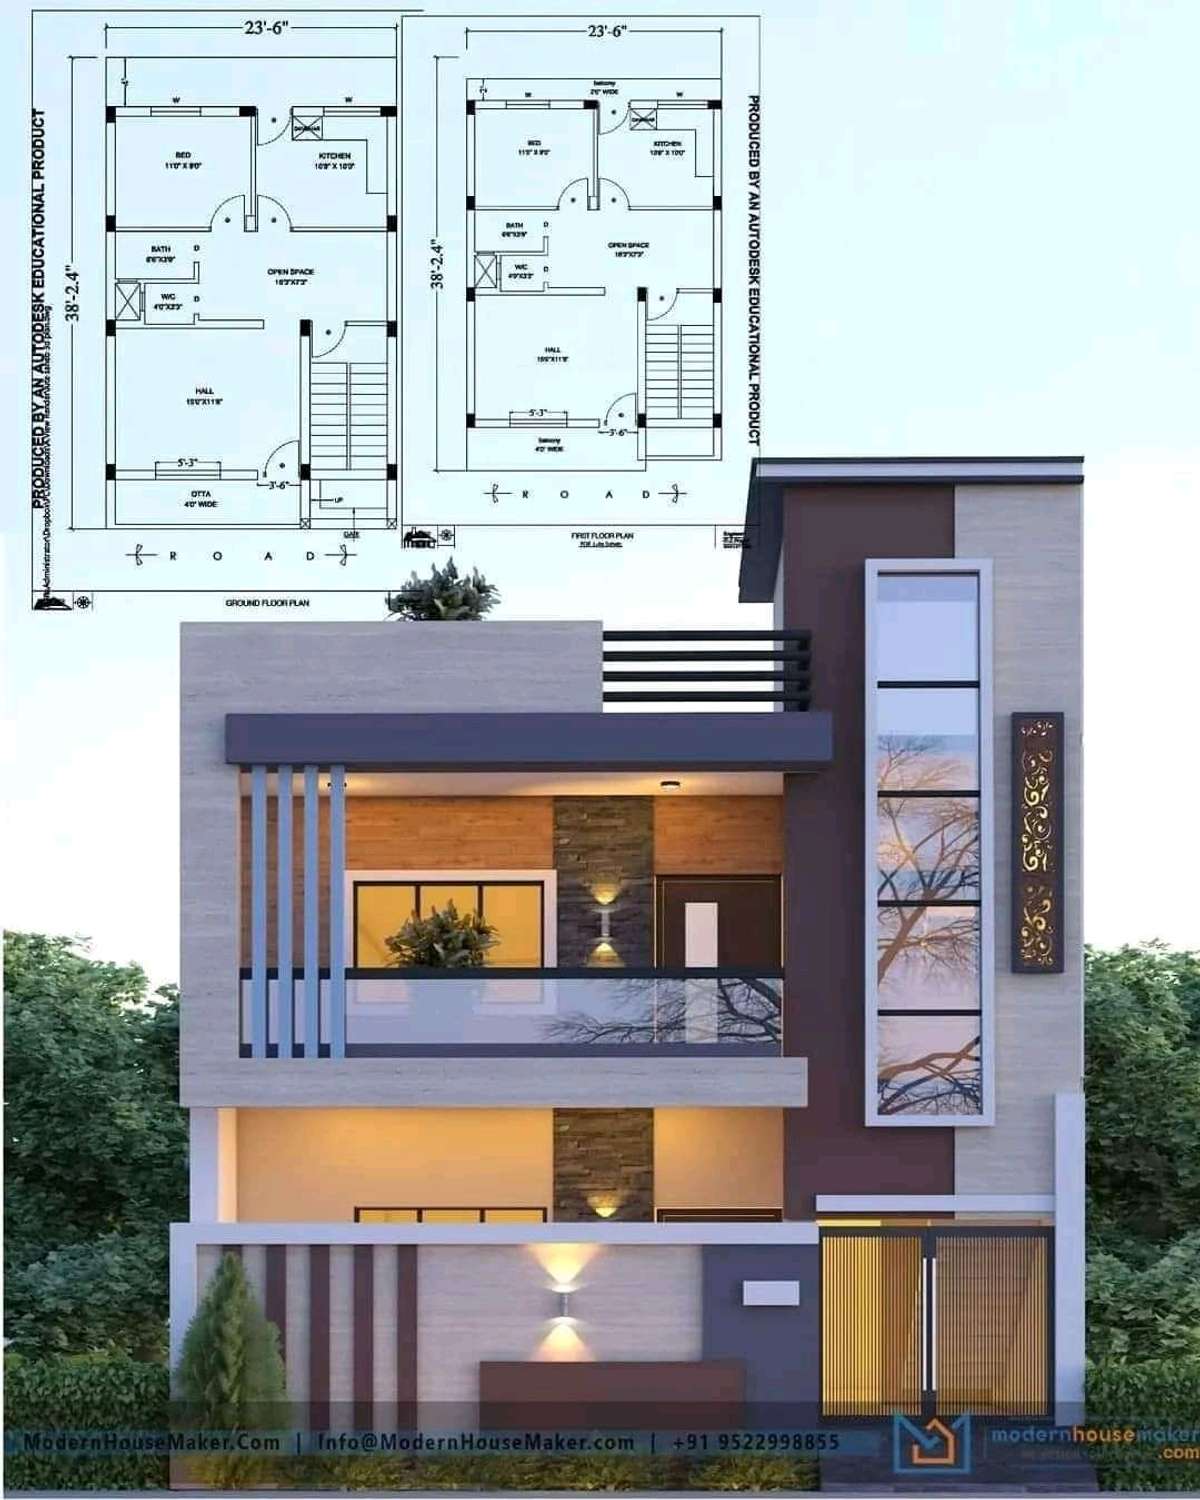 follow us. design your home ðŸ� 
#Architect #structure #trending #home #house #ElevationHome #design #HouseDesigns #interiordesigners #exterior #civil